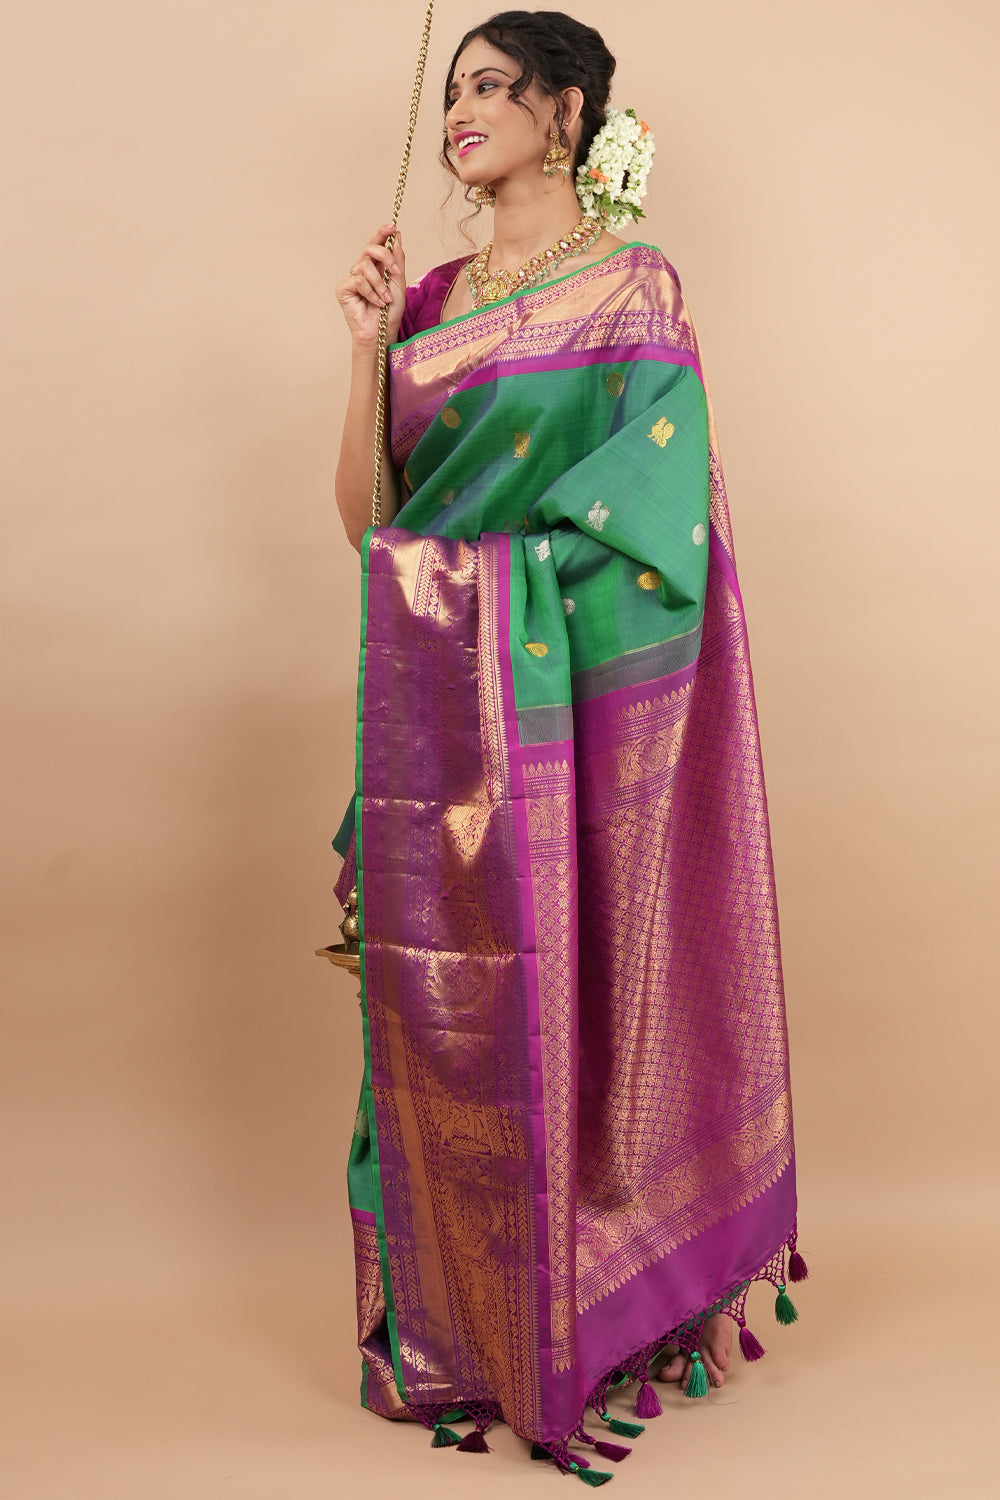 Gadwal Big Border Pure Silk saree in peacock Green dual tone with Violet Border | Silk Mark certified